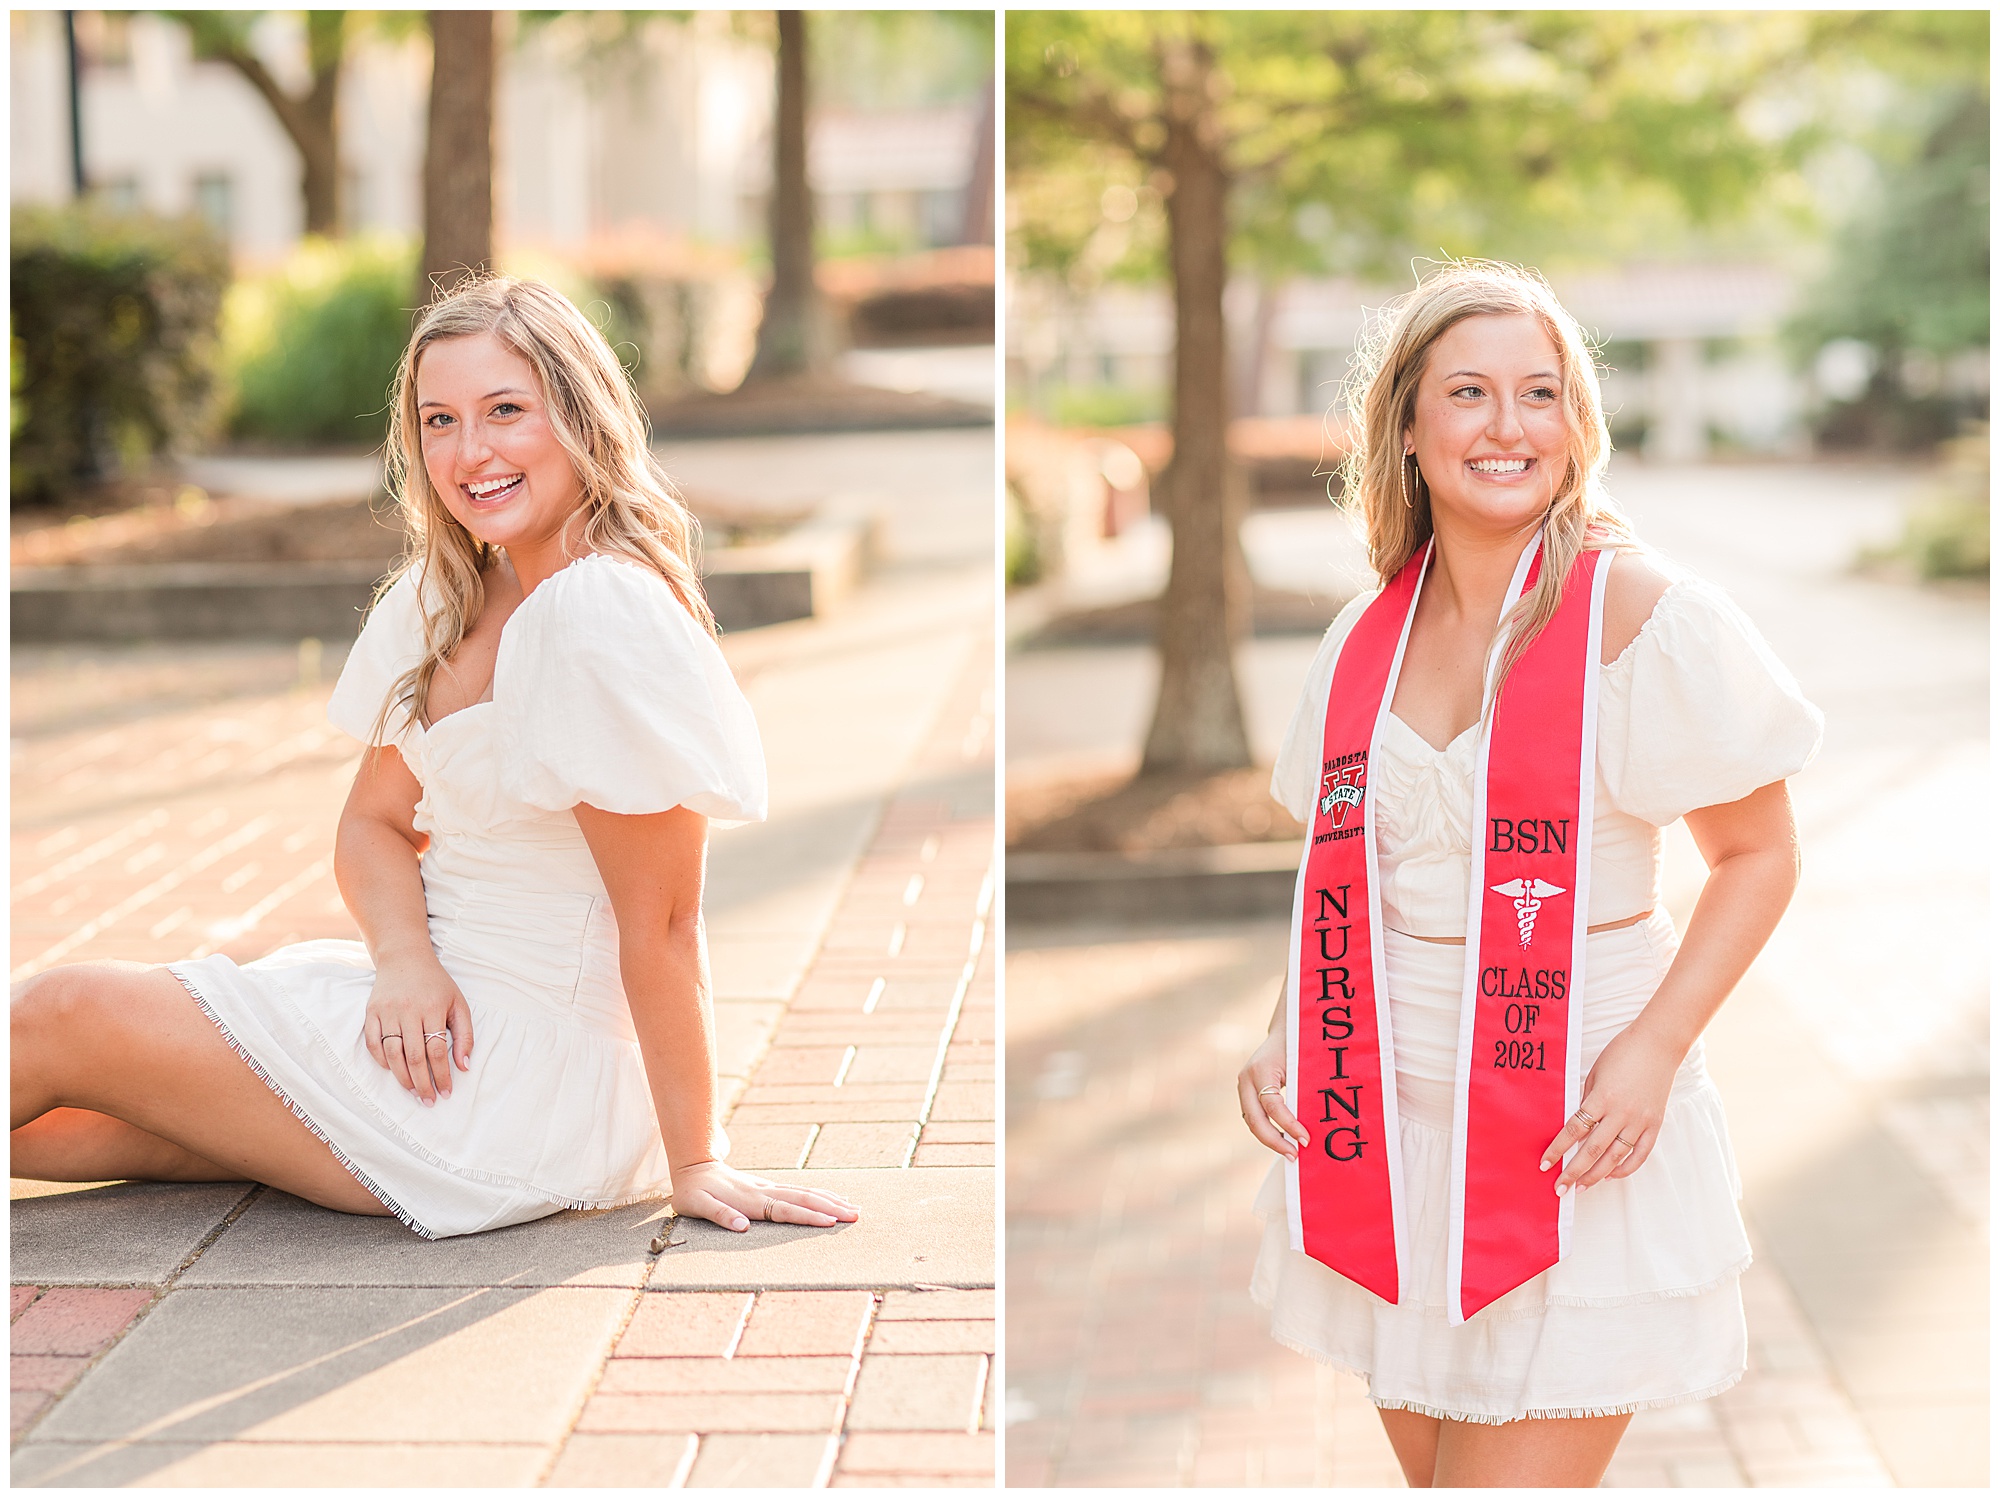 Bailey, Graduation Photos, Valdosta State University, Kelley Stinson Photography, BSN, nursing photos, white graduation dress